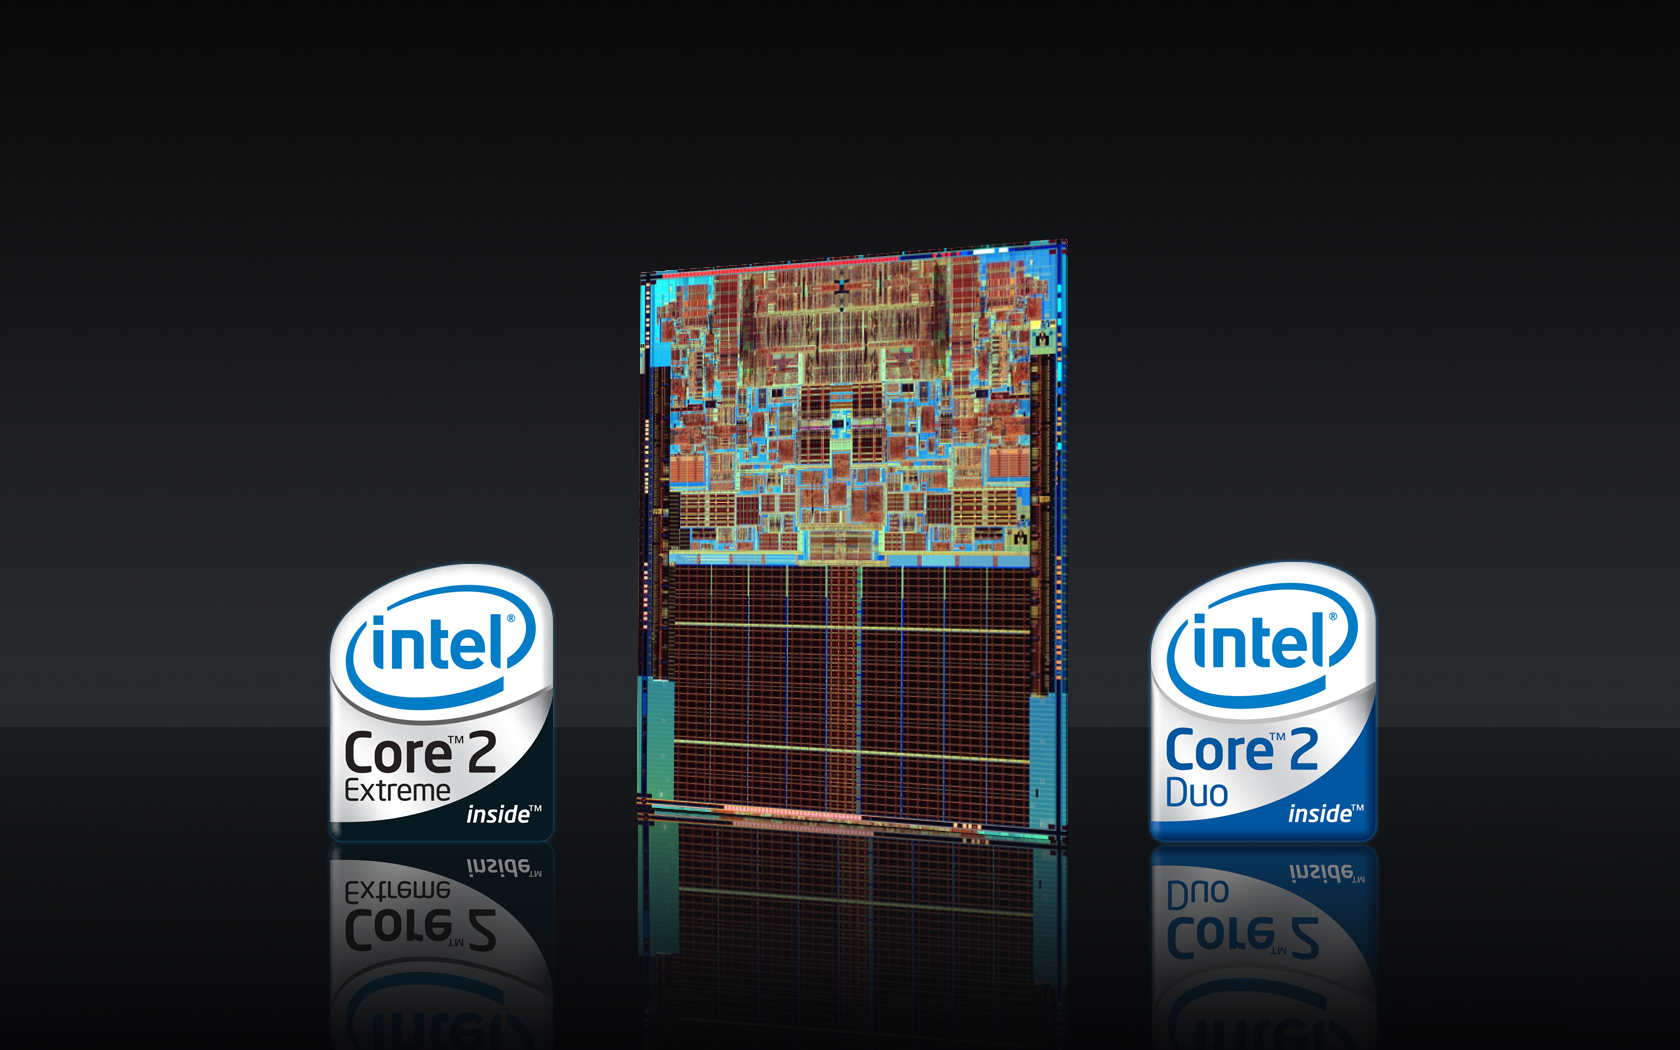 Reg intel. Интел 2 дуо. Intel Core 2x Duo. Intel Core 2 Duo inside. Ячейка Intel Core 2 Duo.